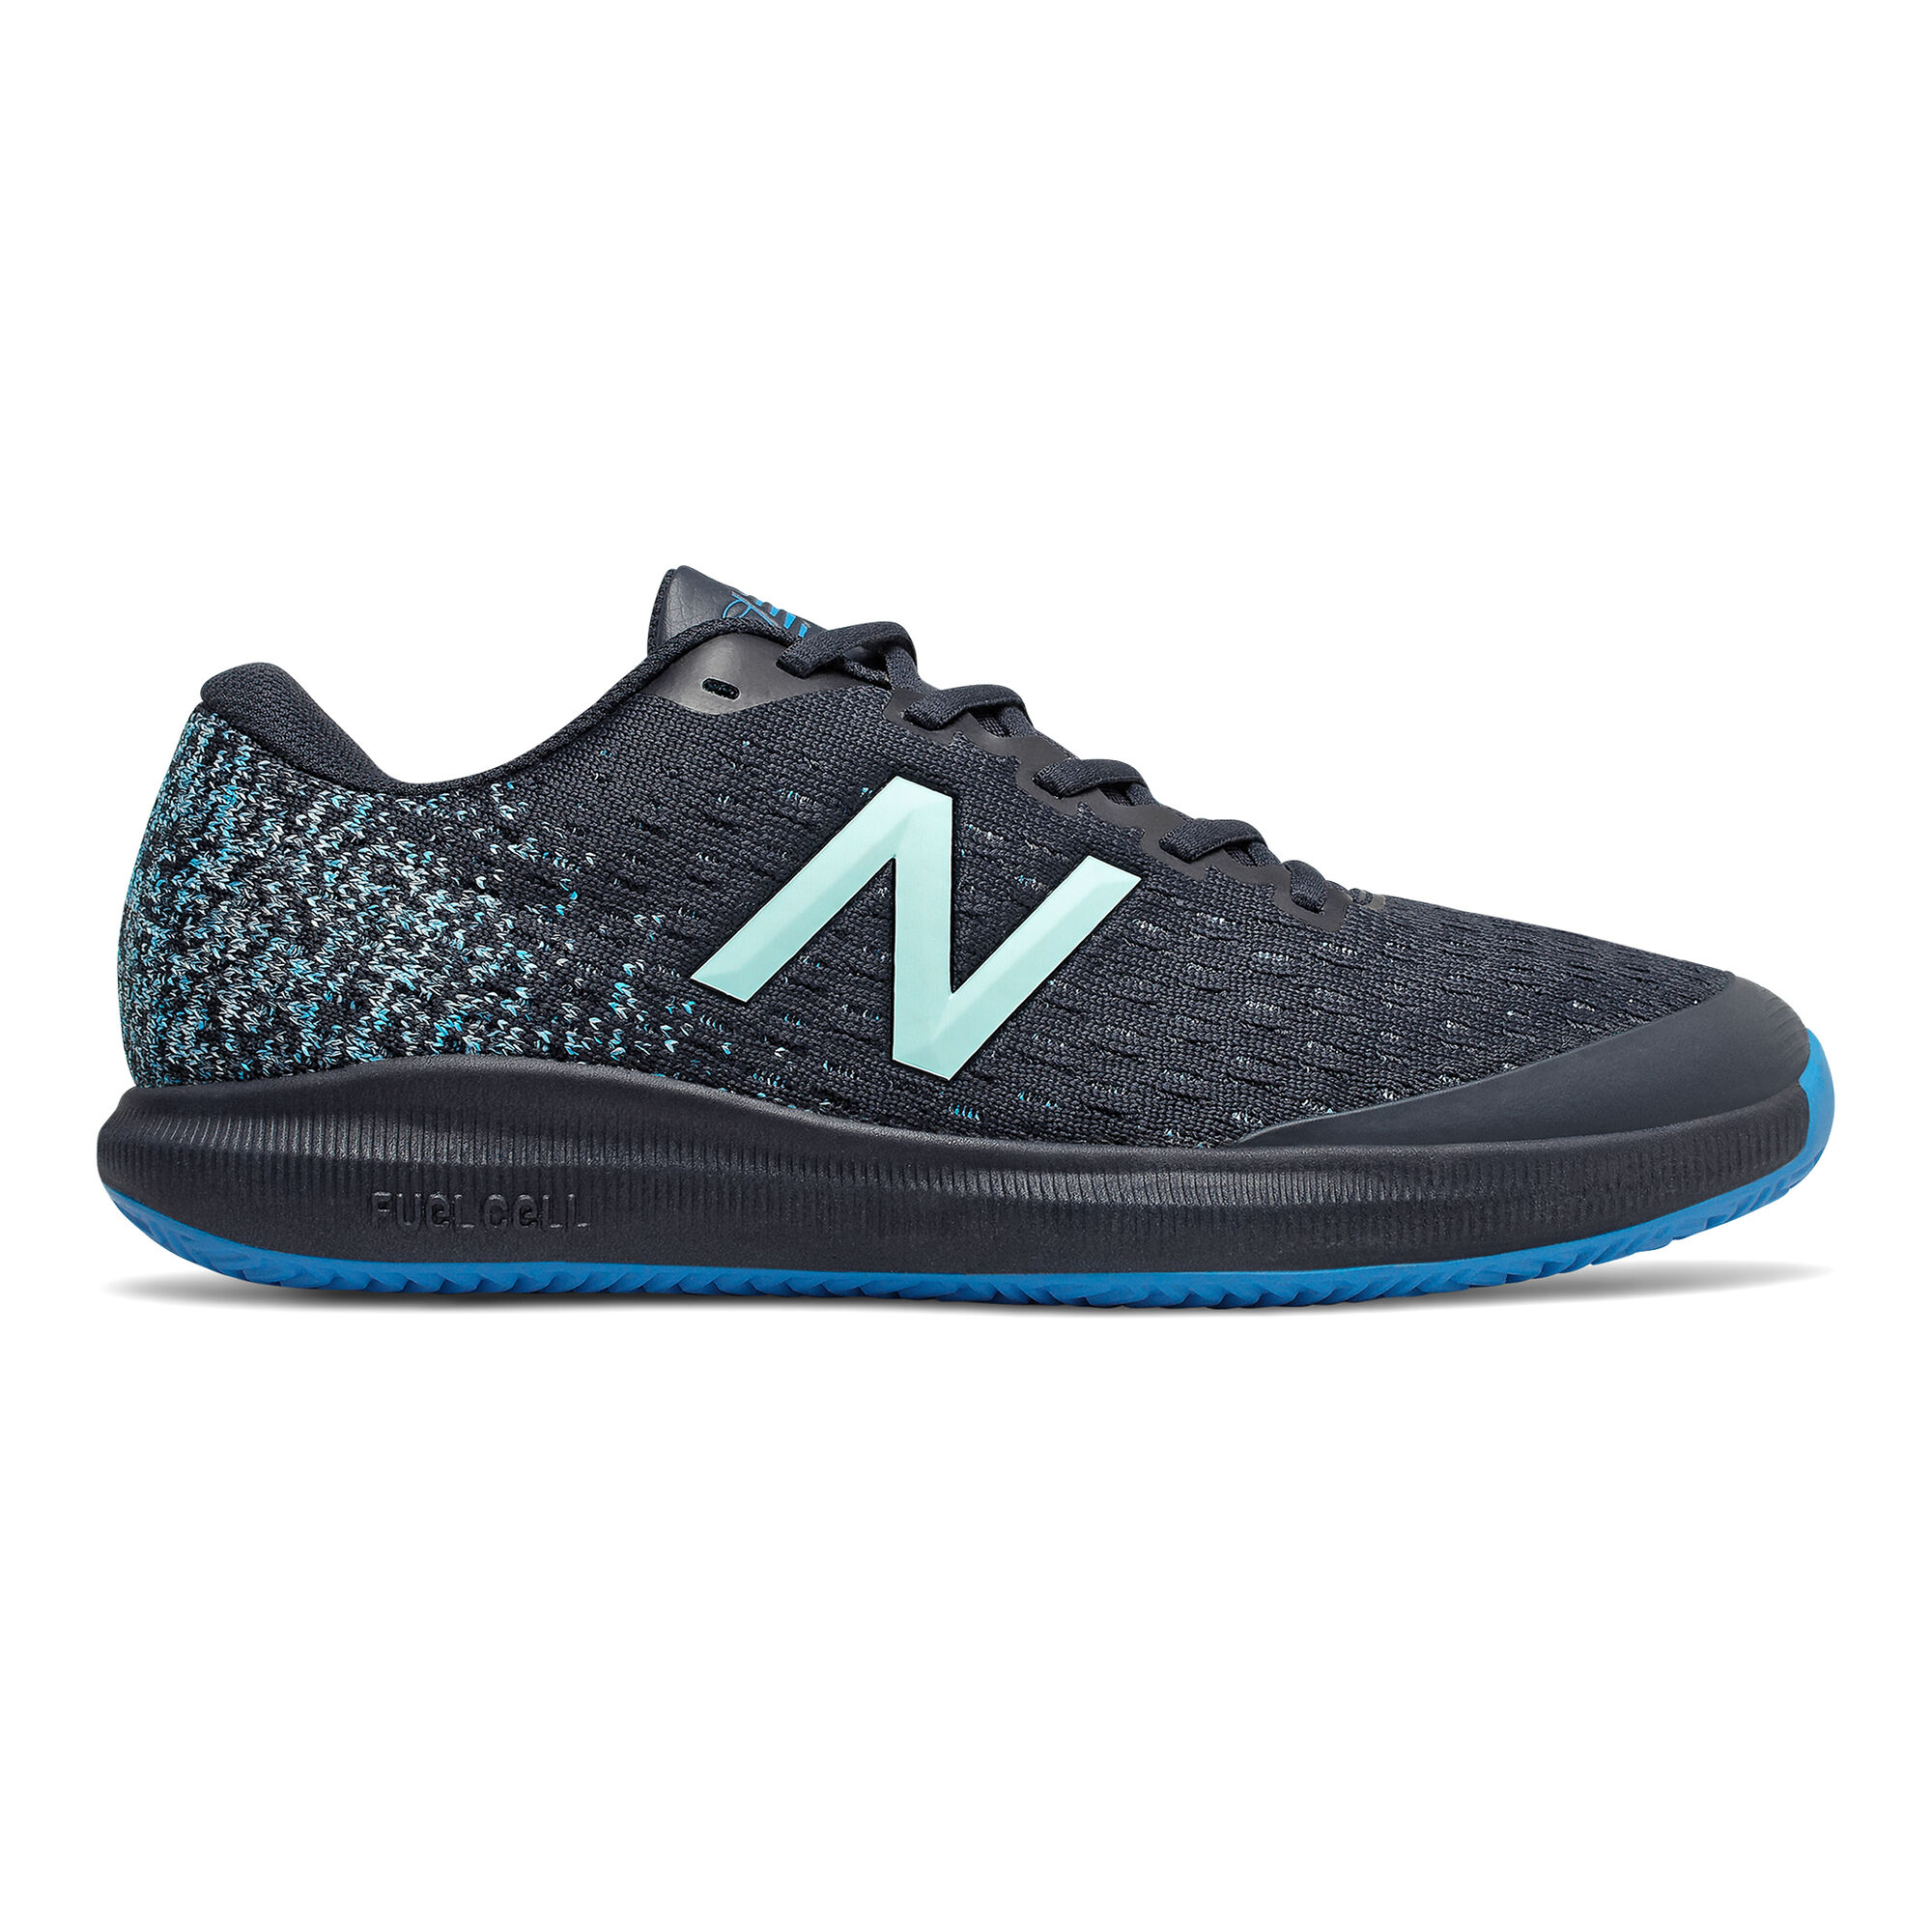 Giftig Verduisteren Inspecteur buy New Balance 996 V4 Clay Court Shoe Men - Dark Blue, Mint online |  Tennis-Point